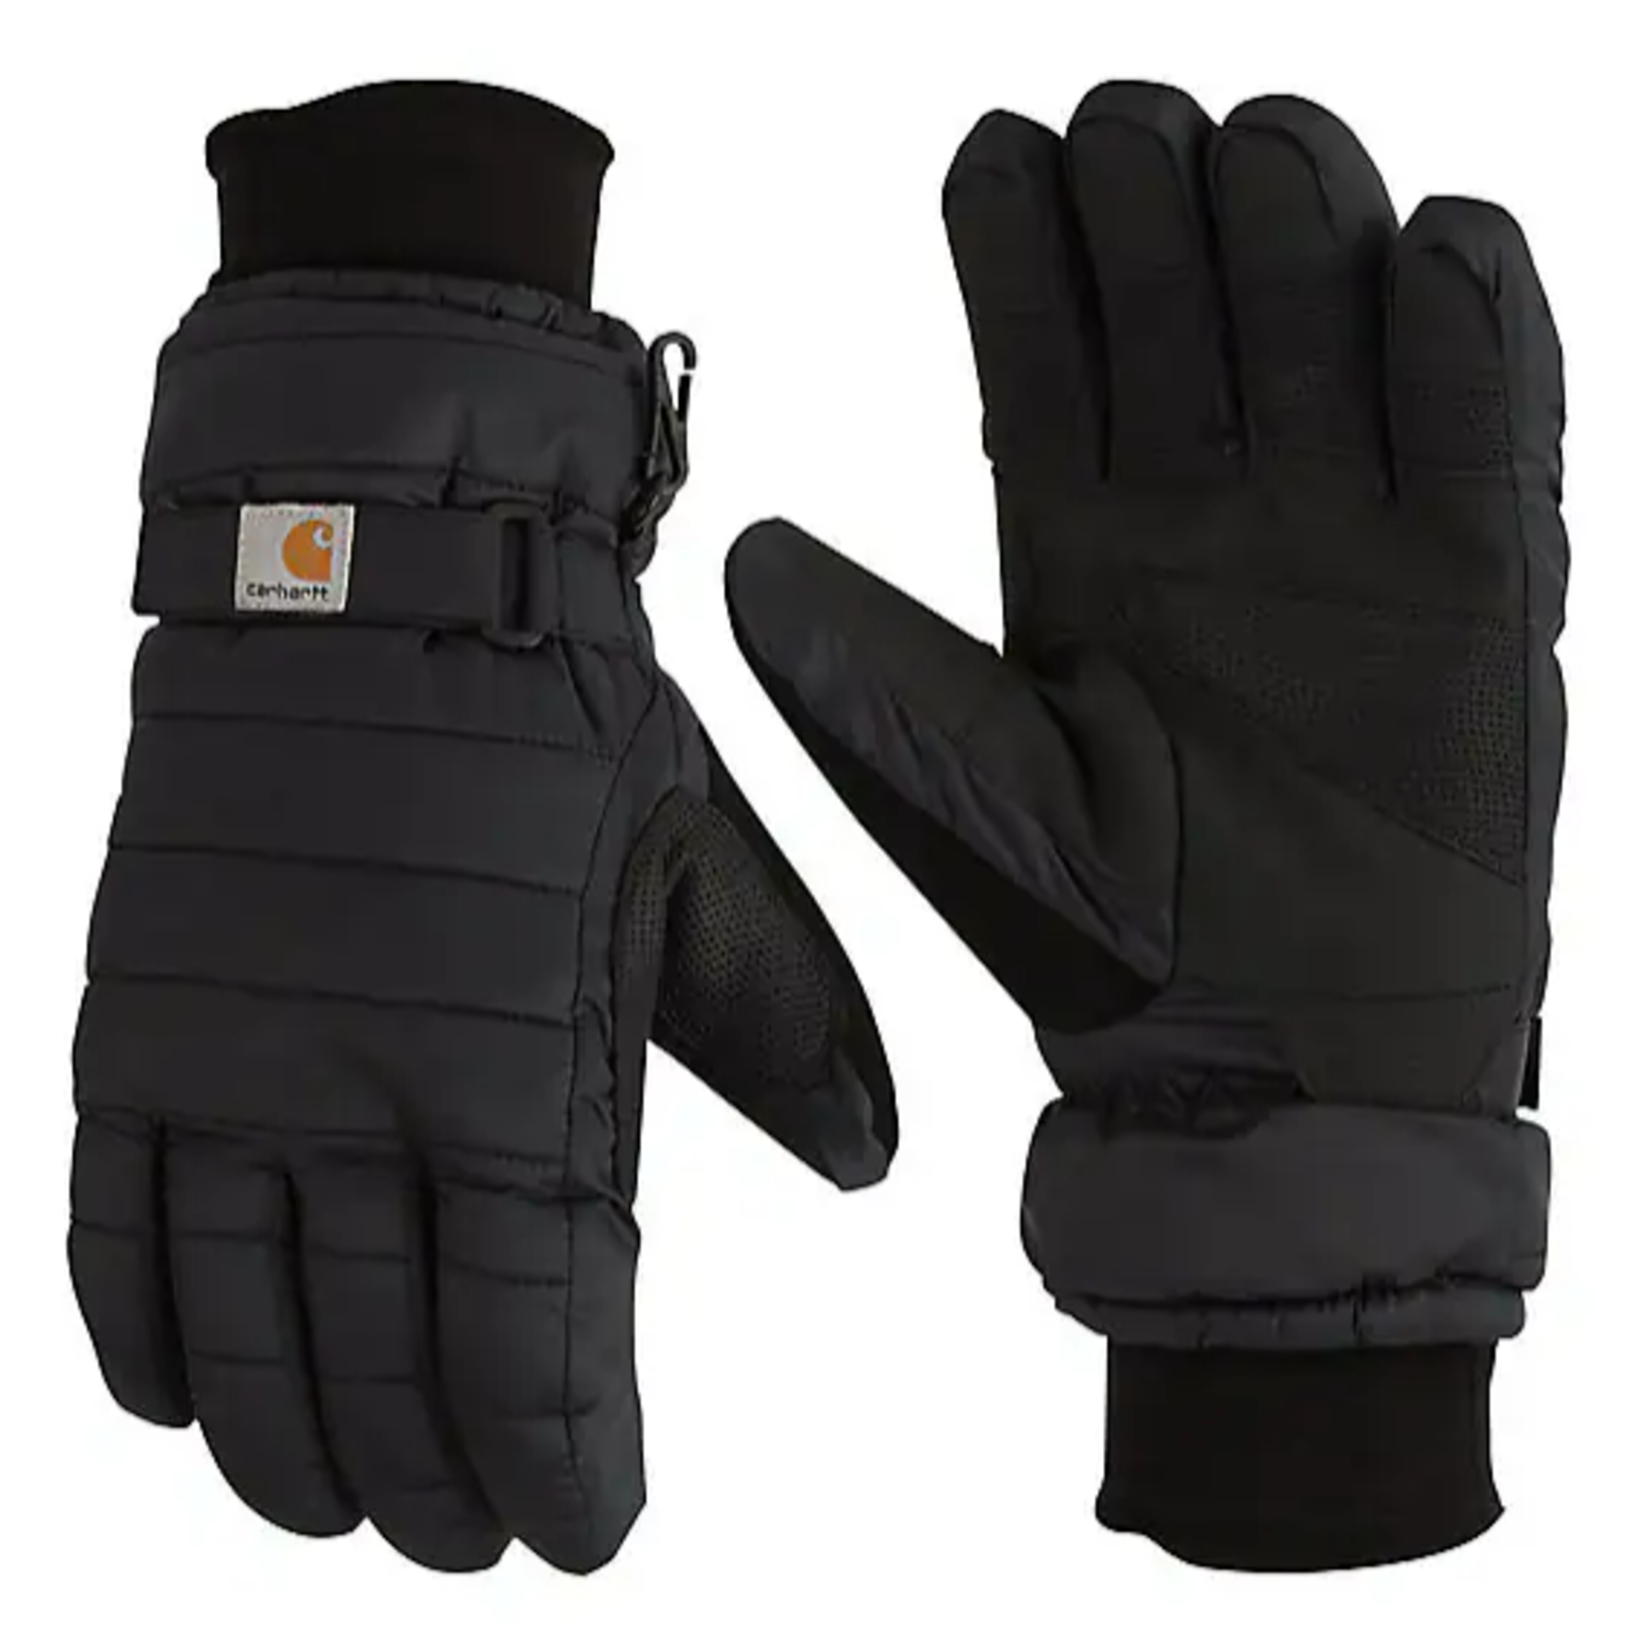 Carhartt Women's Quilted Waterproof Gloves GL0575W - Uniform Pros